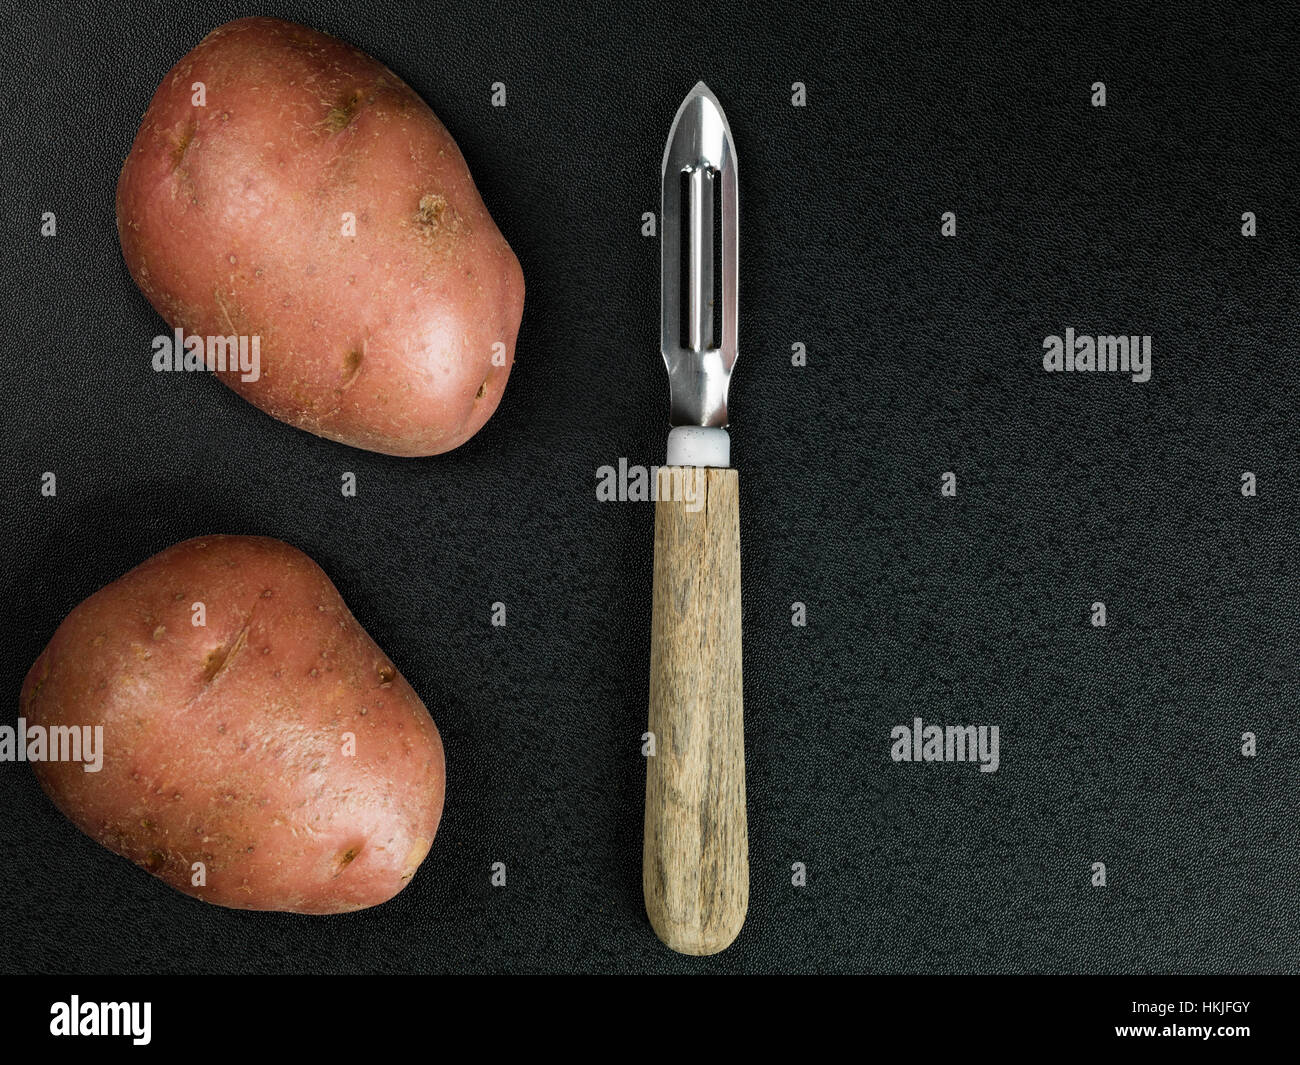 https://c8.alamy.com/comp/HKJFGY/traditional-potato-peeler-with-two-uncooked-potatoes-HKJFGY.jpg